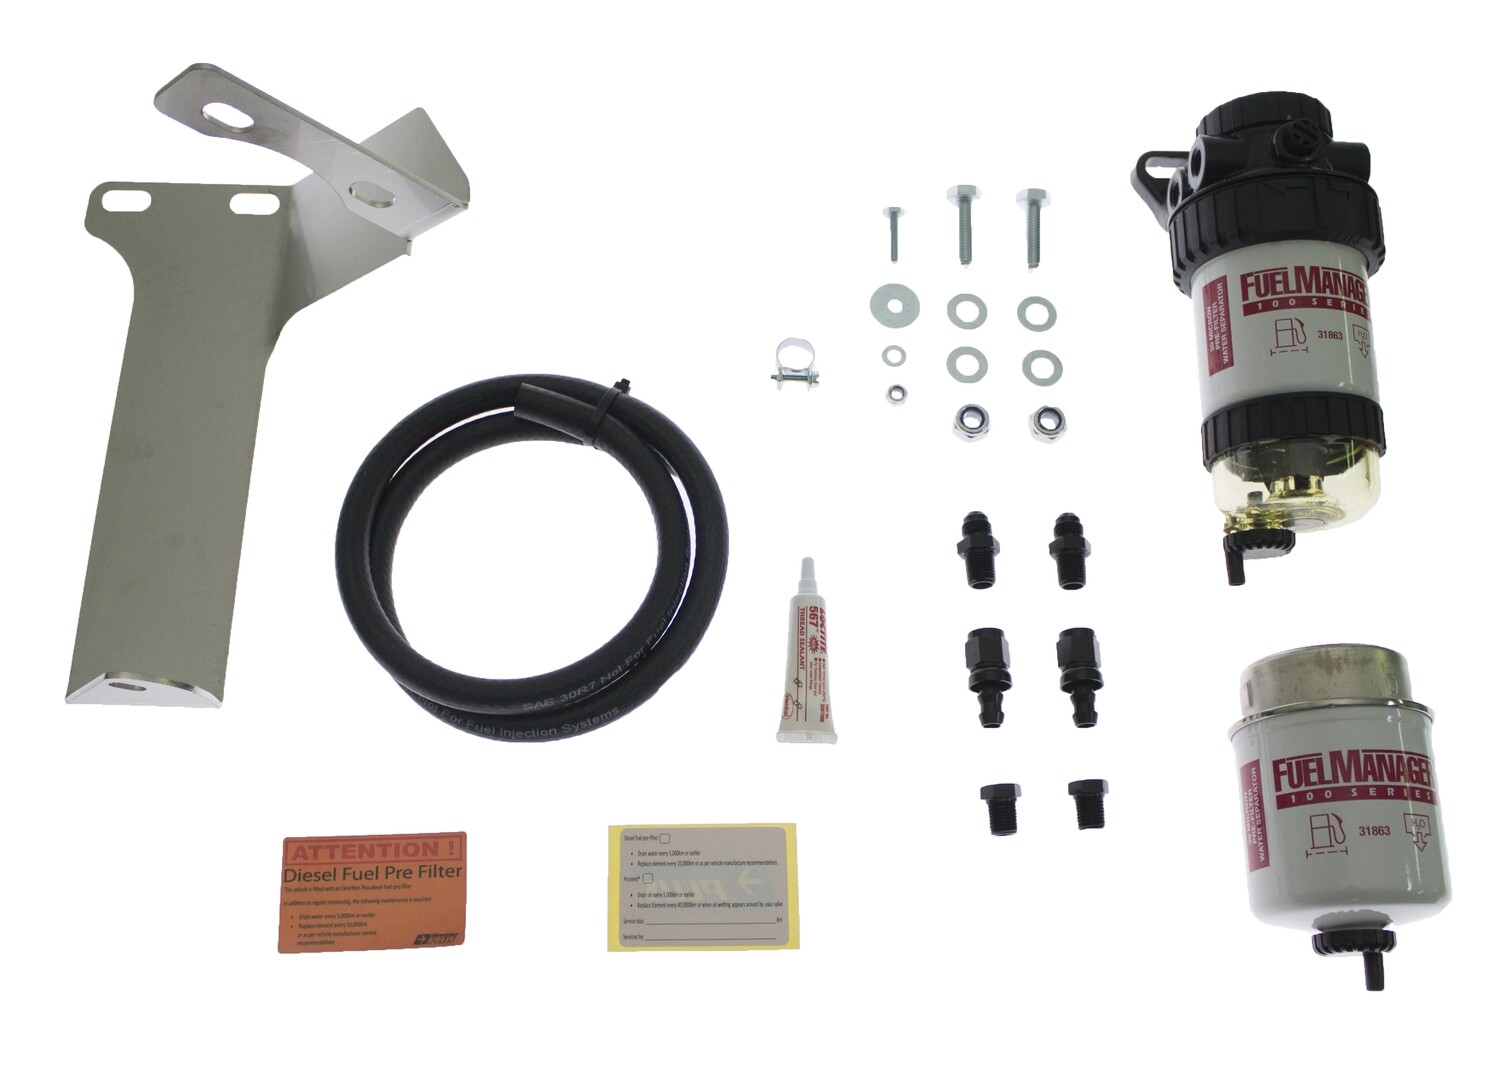 Diesel Pre Filter fuel  System Kit To Suit Toyota Prado 155 Series 1GD-FTV 2.8LTR FM623DPK